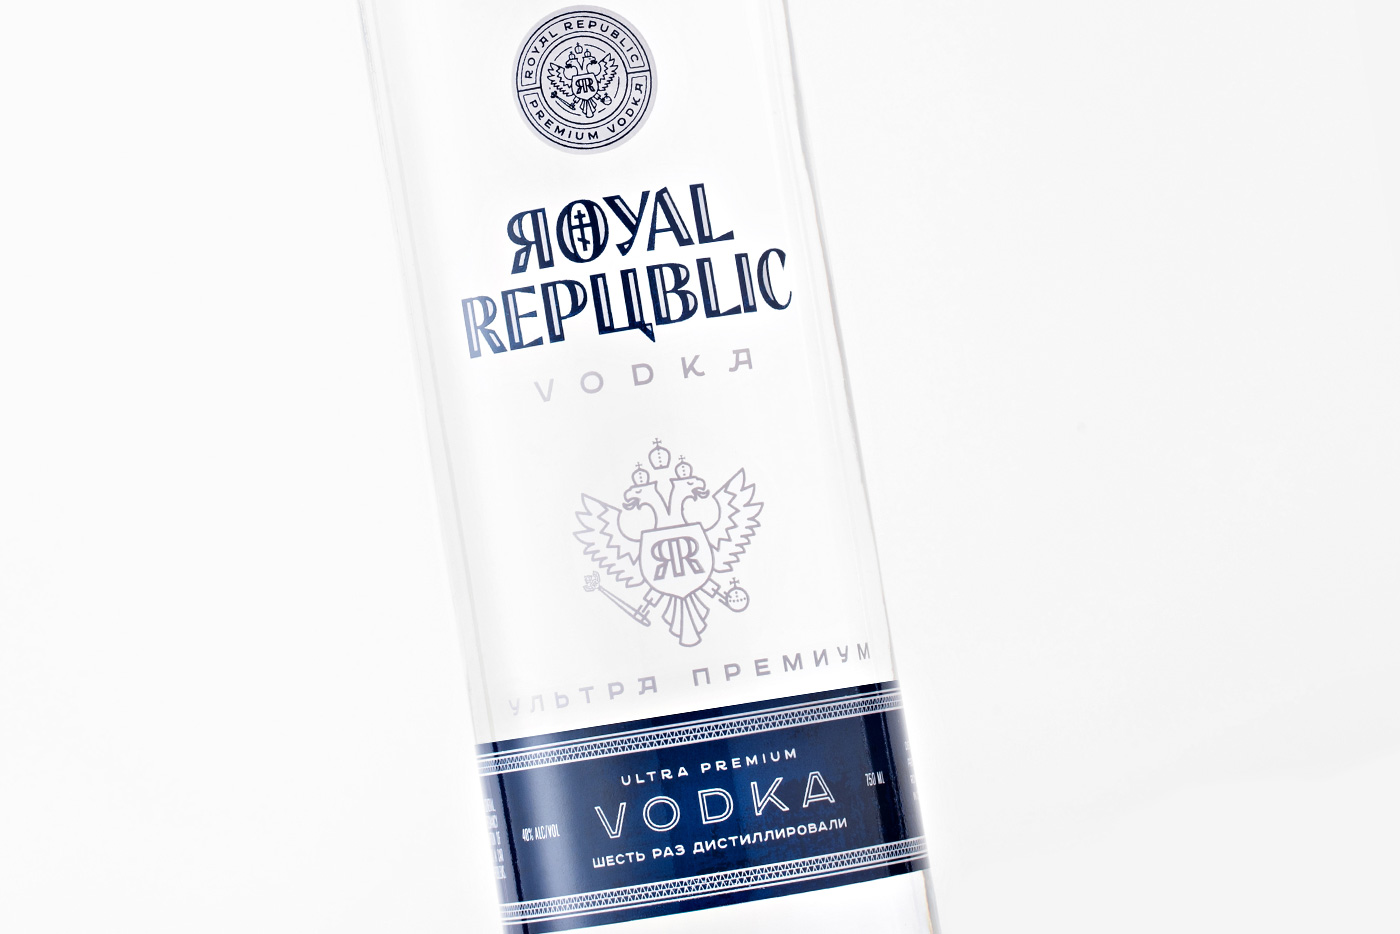 Royal Republic Vodka